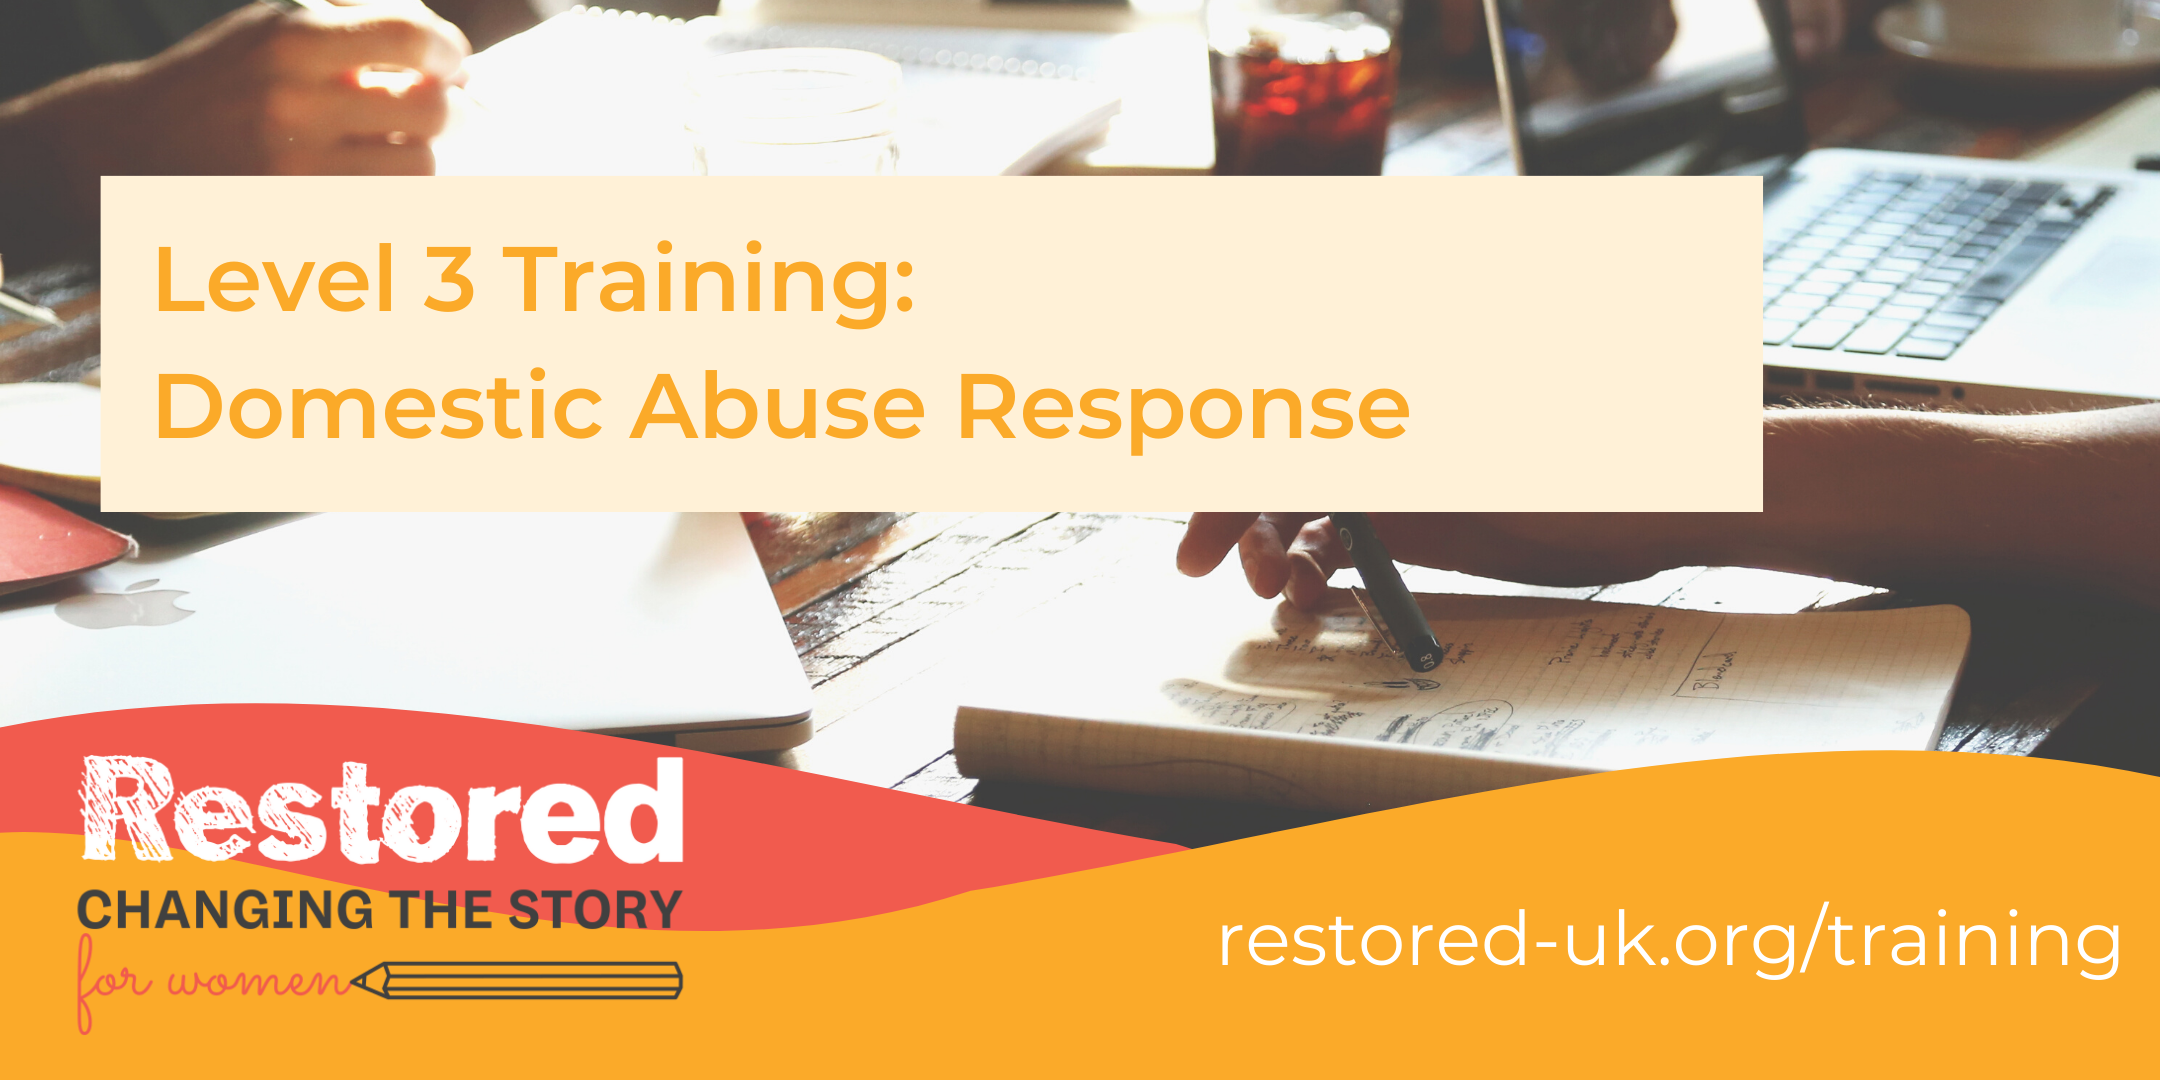 Level 3 Training: Domestic Abuse Response